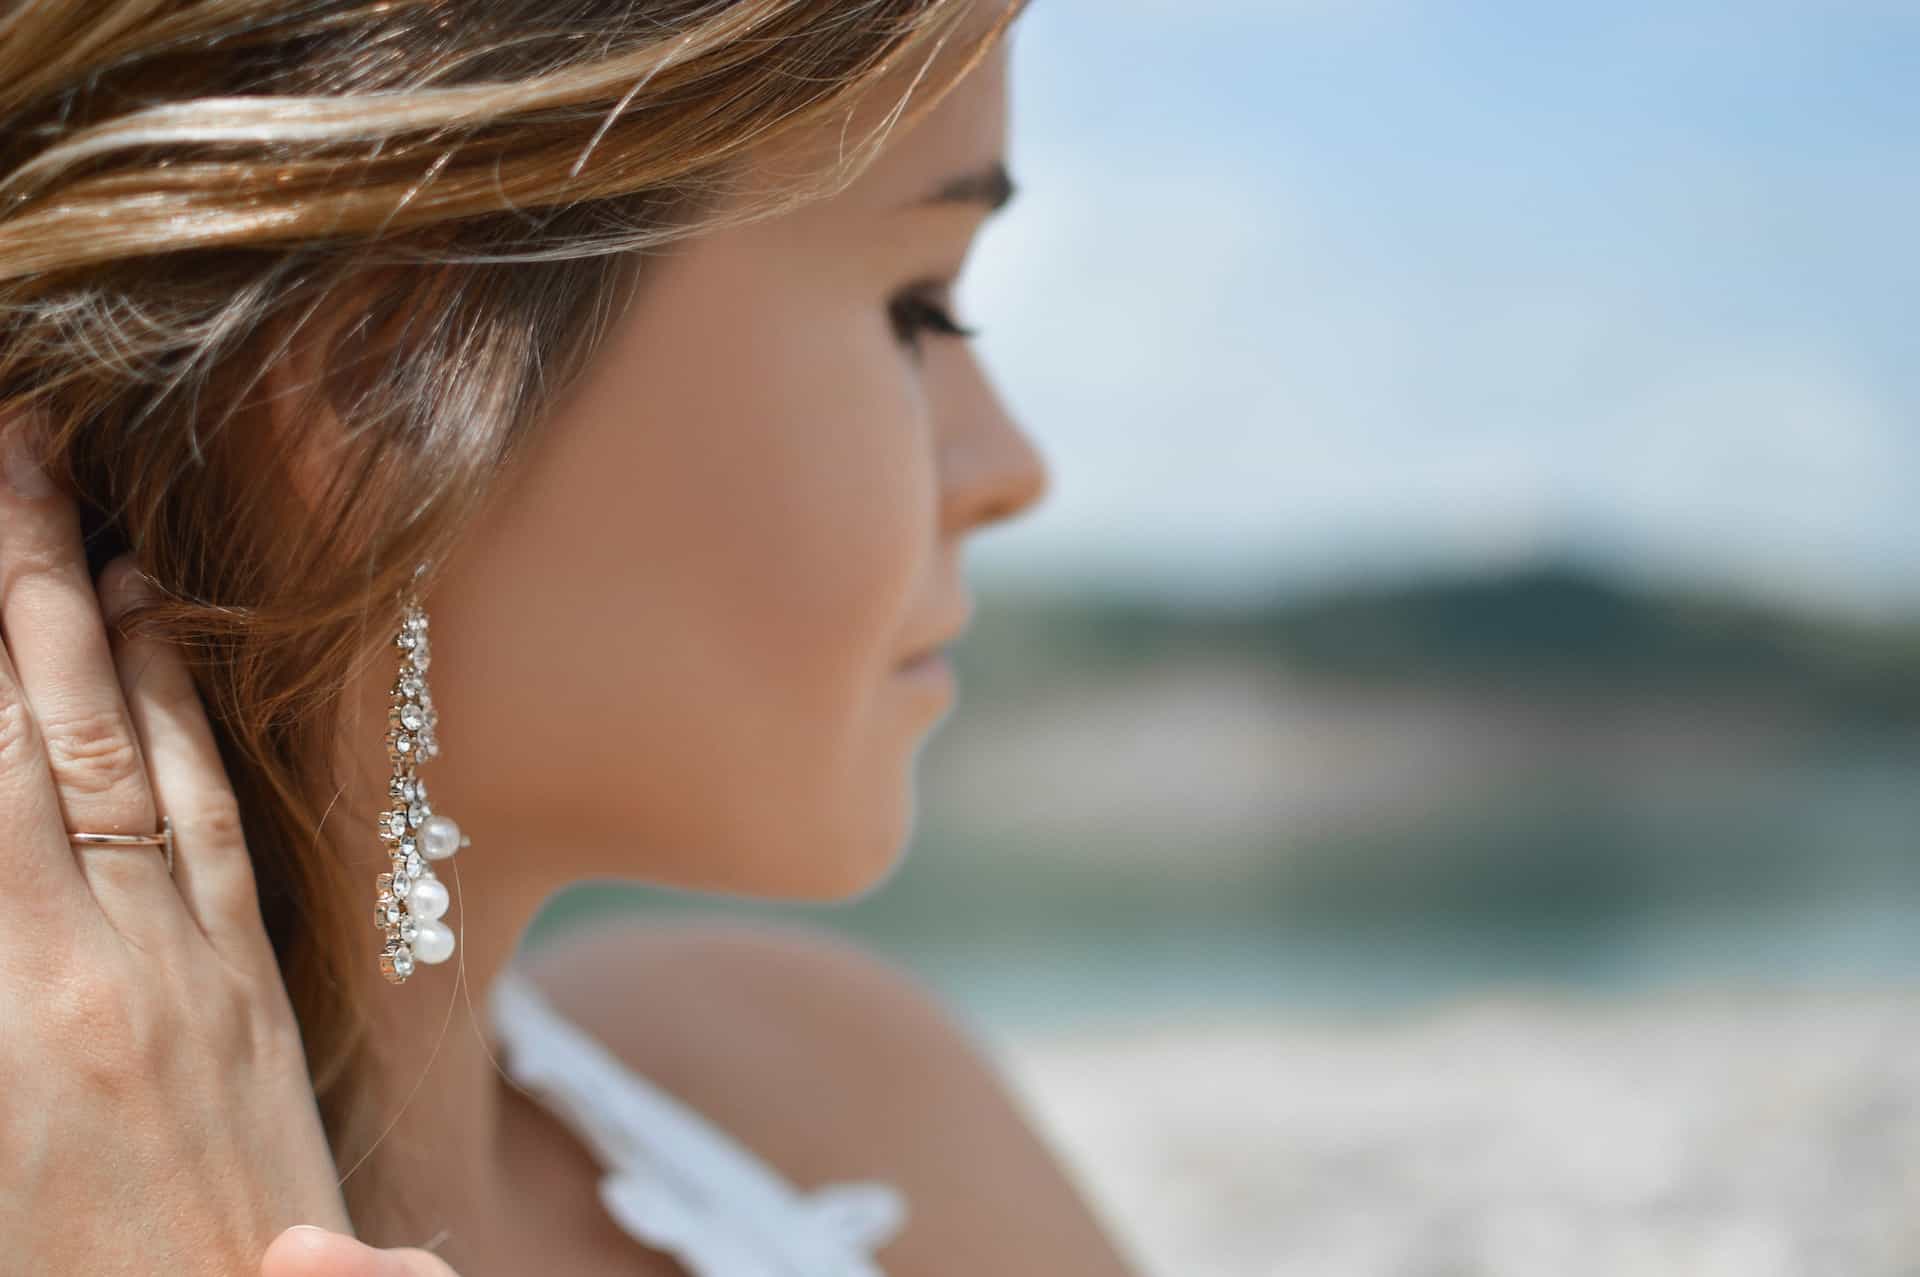 a woman with dangling earrings